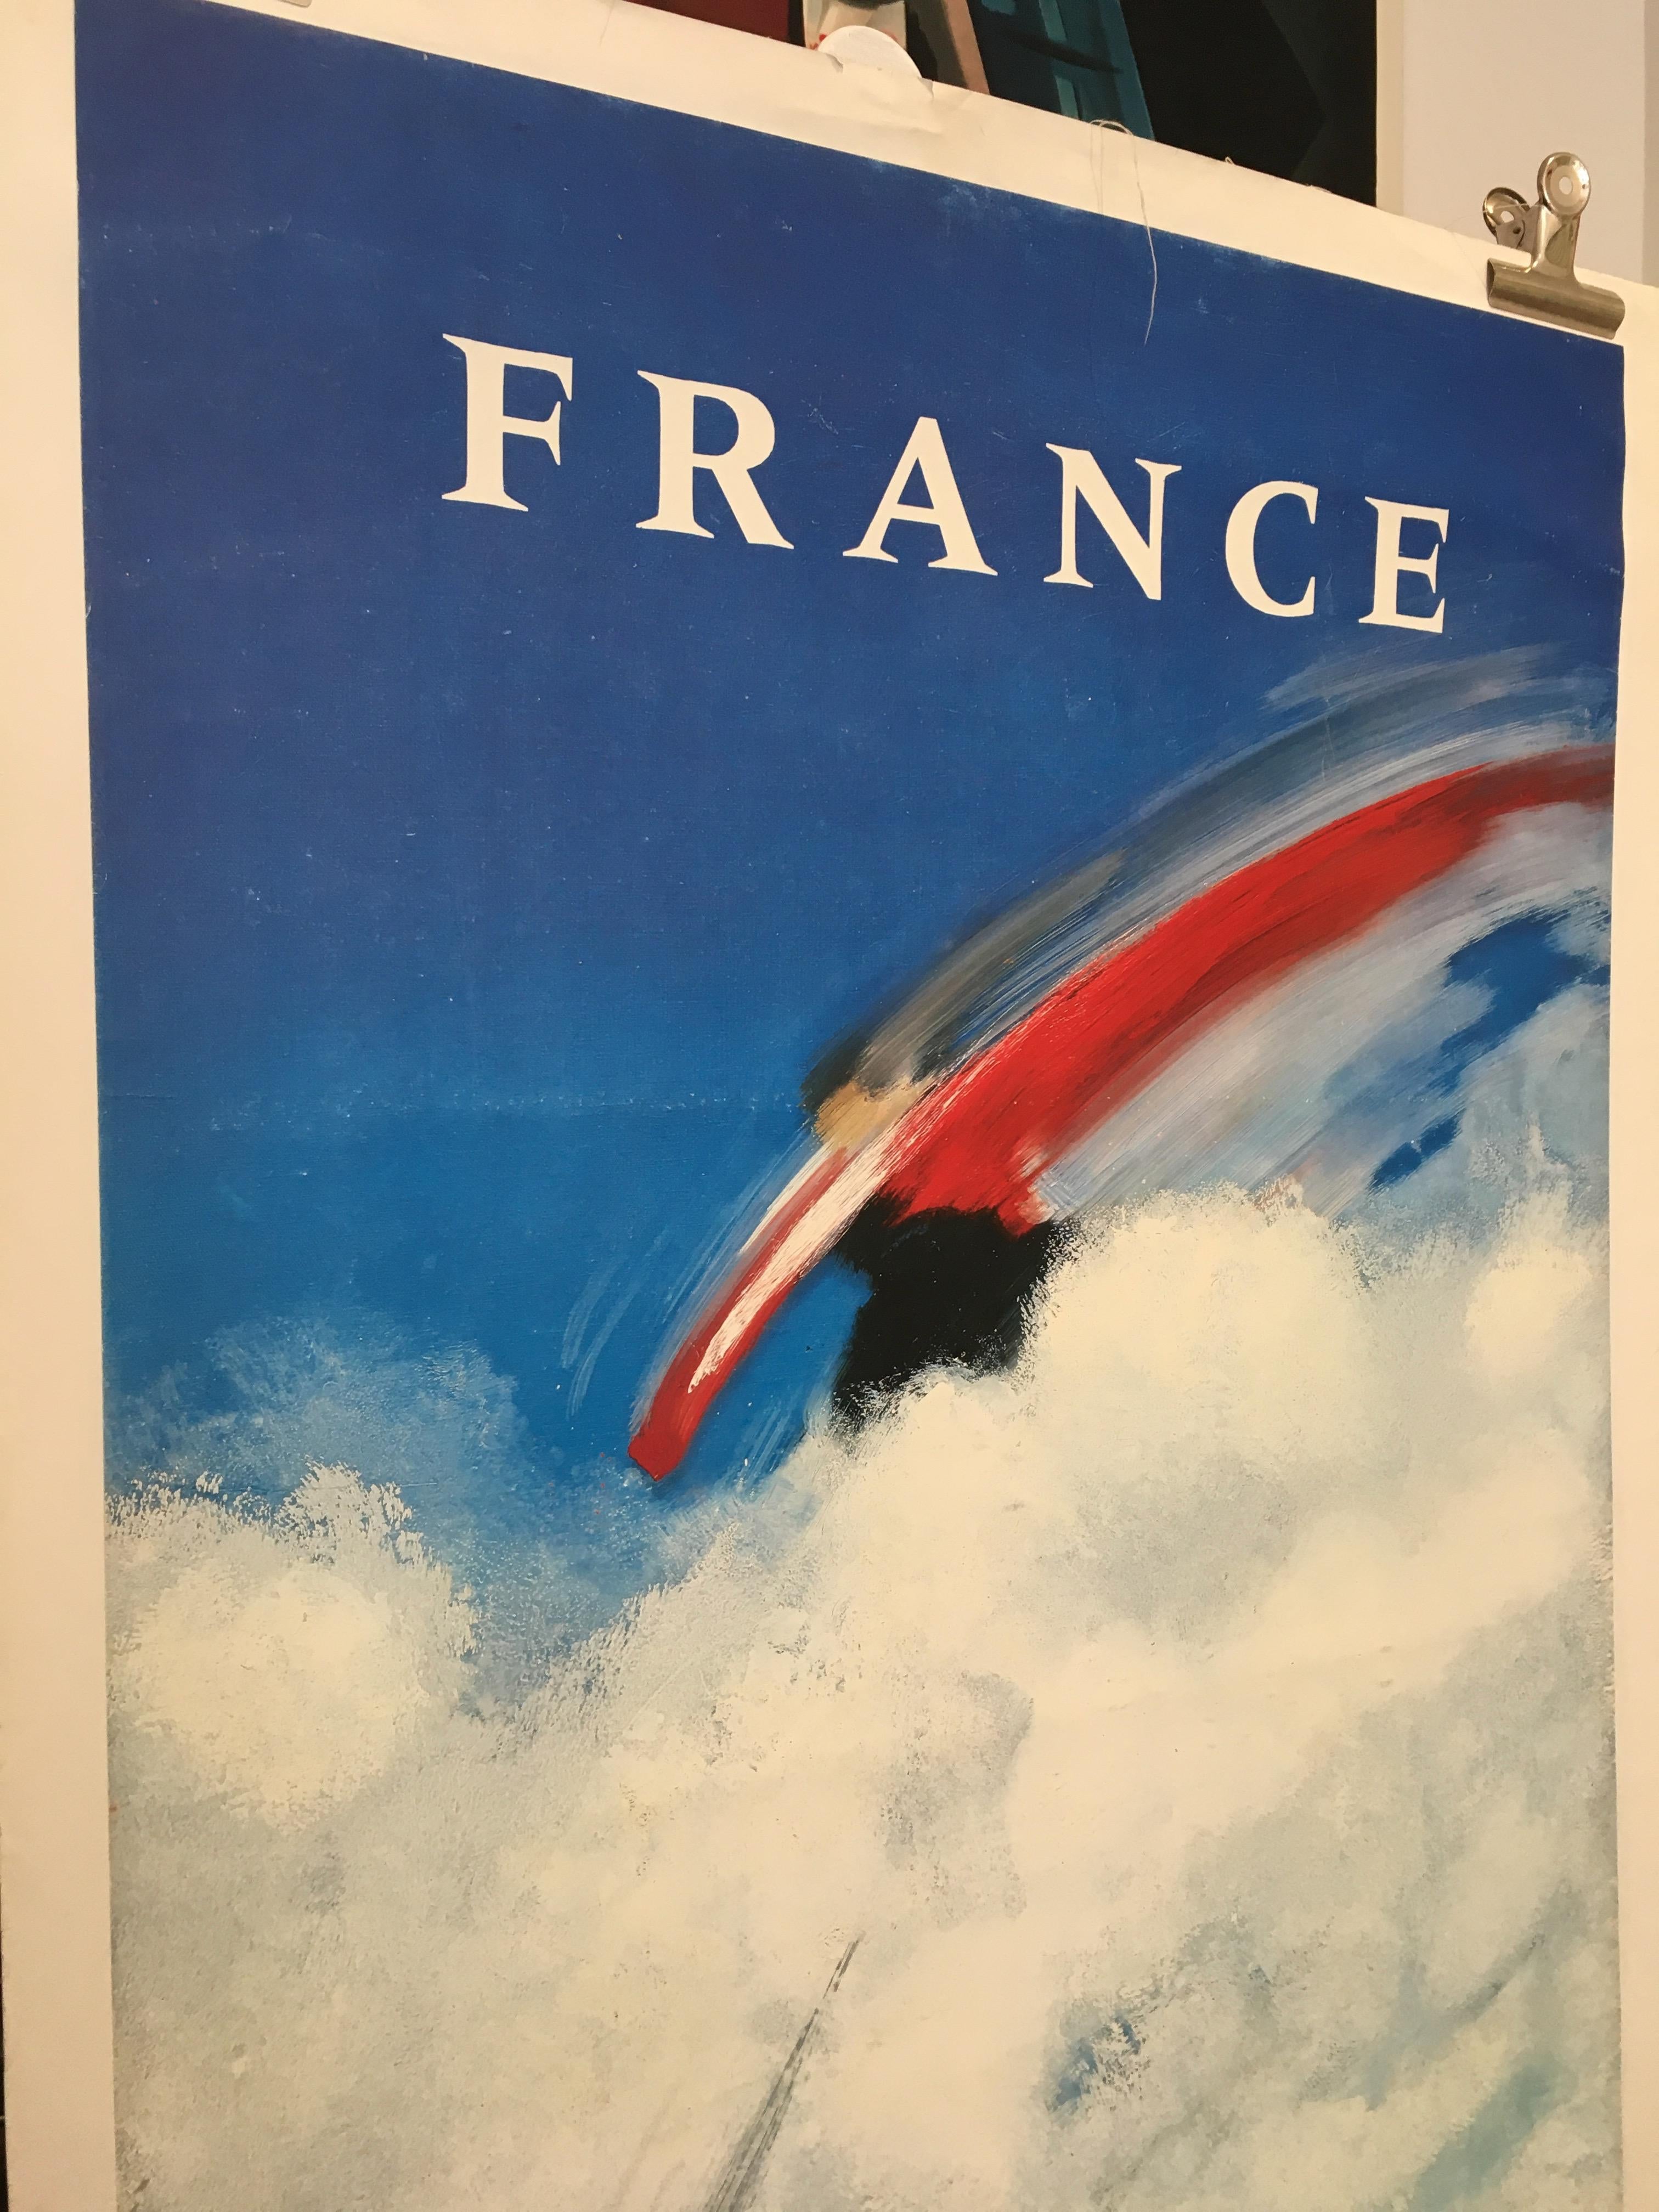 Paper 'France Rhone-Alpes' Original Vintage French Ski Poster, by Mathieu